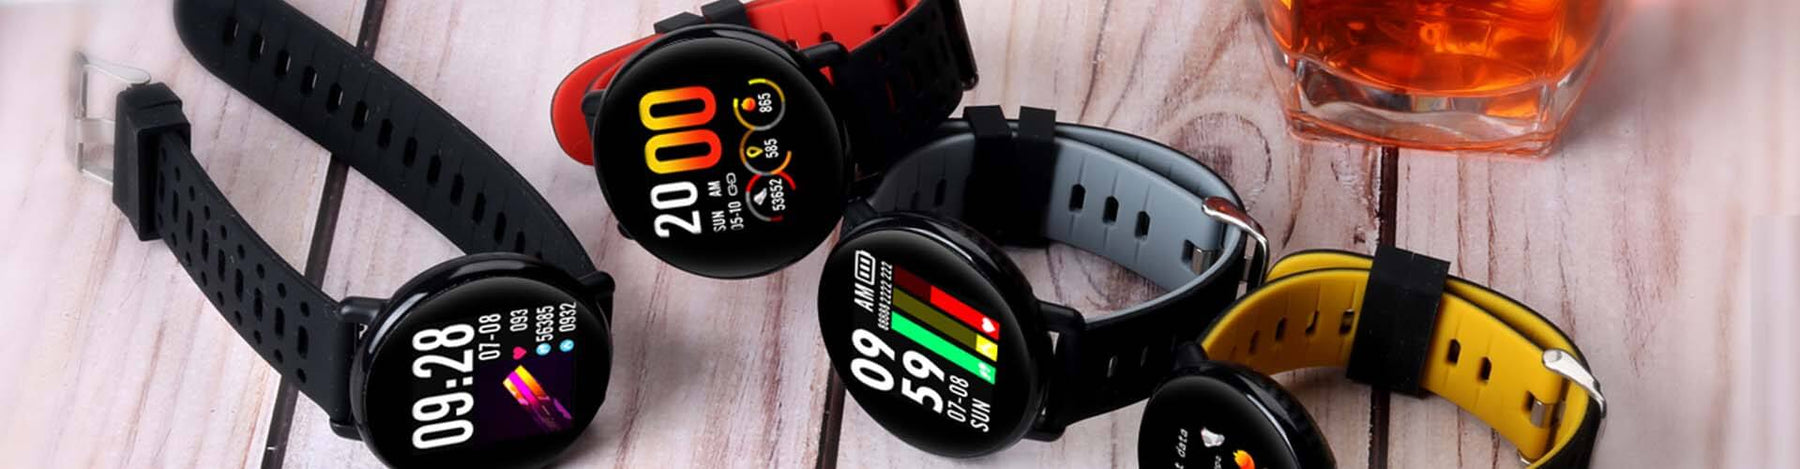 Full Touch Screen Tracker IP68 Fitness Wearable Smart Watch | video